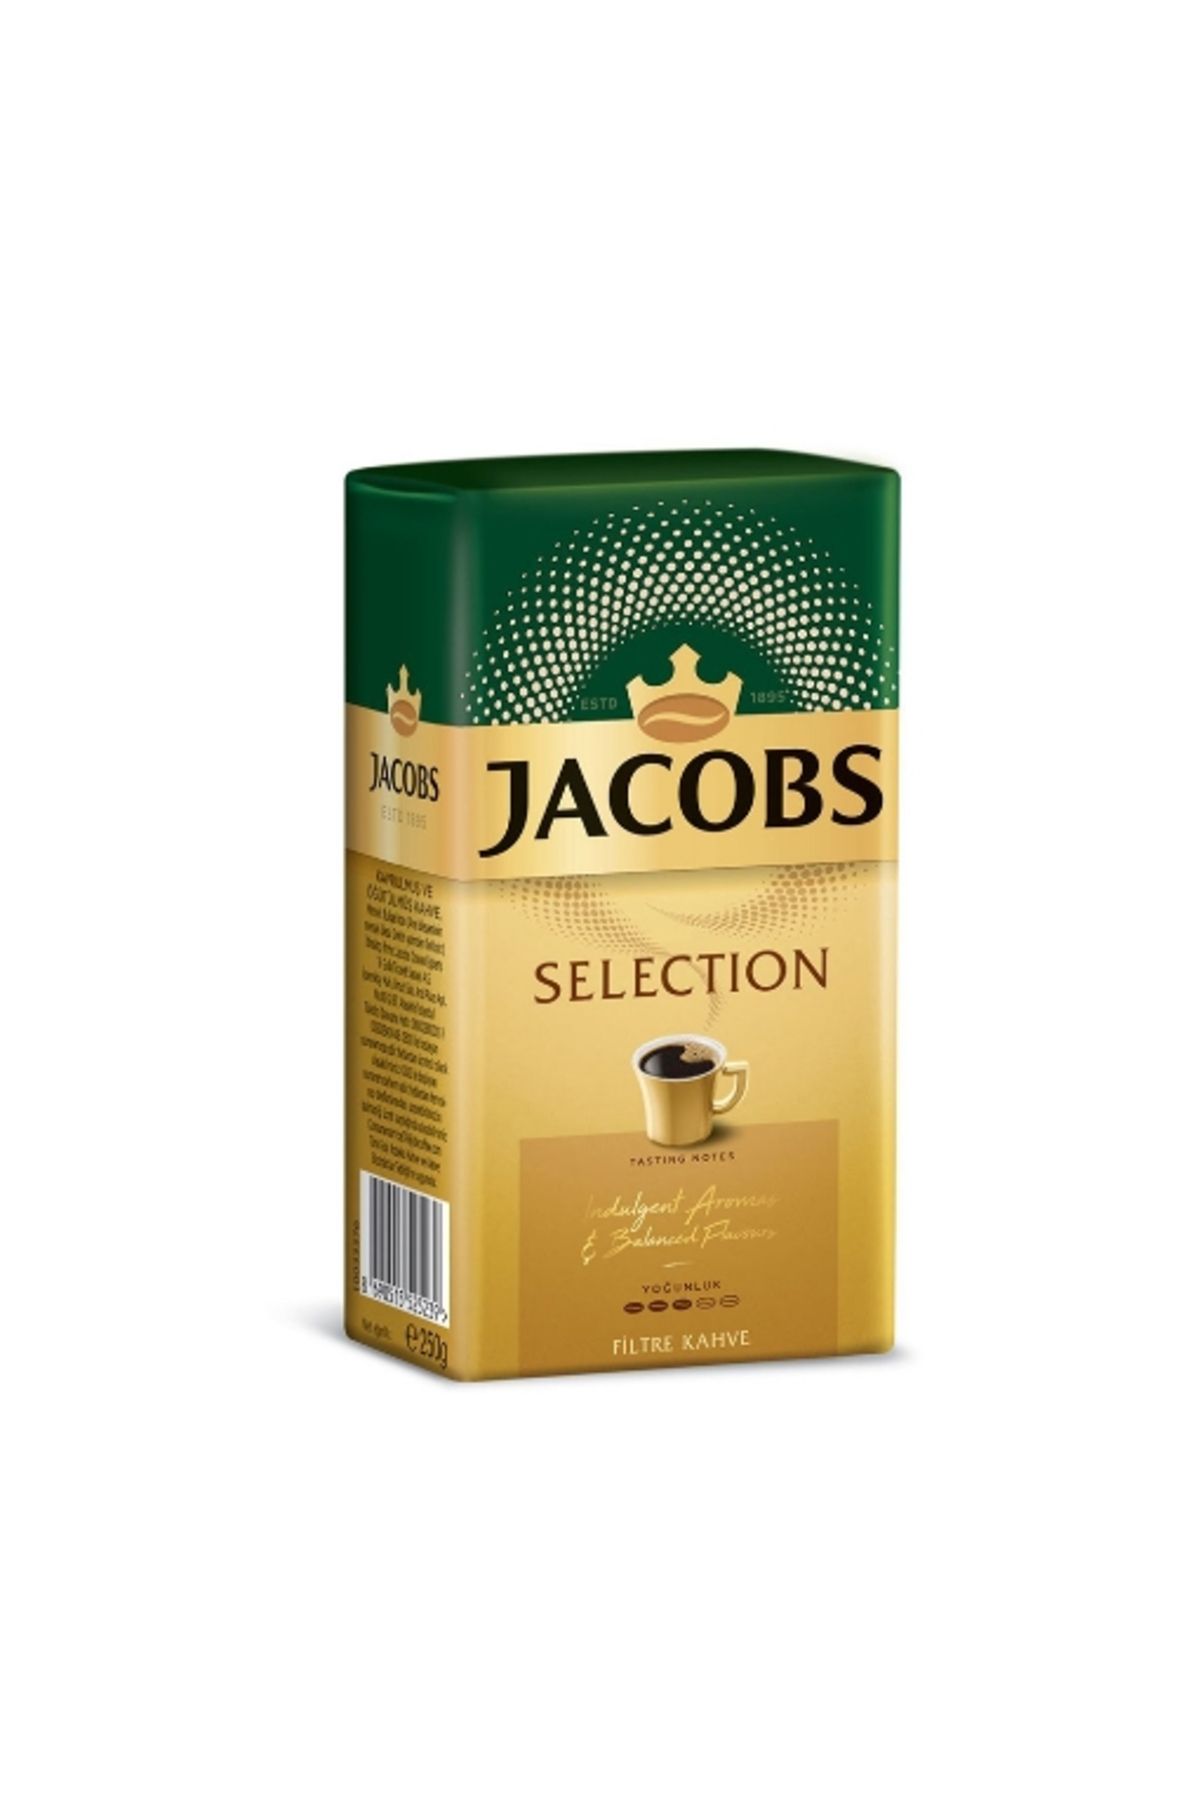 Jacobs Selection Filtre Kahve Kutu 250 Gr. (12'li)